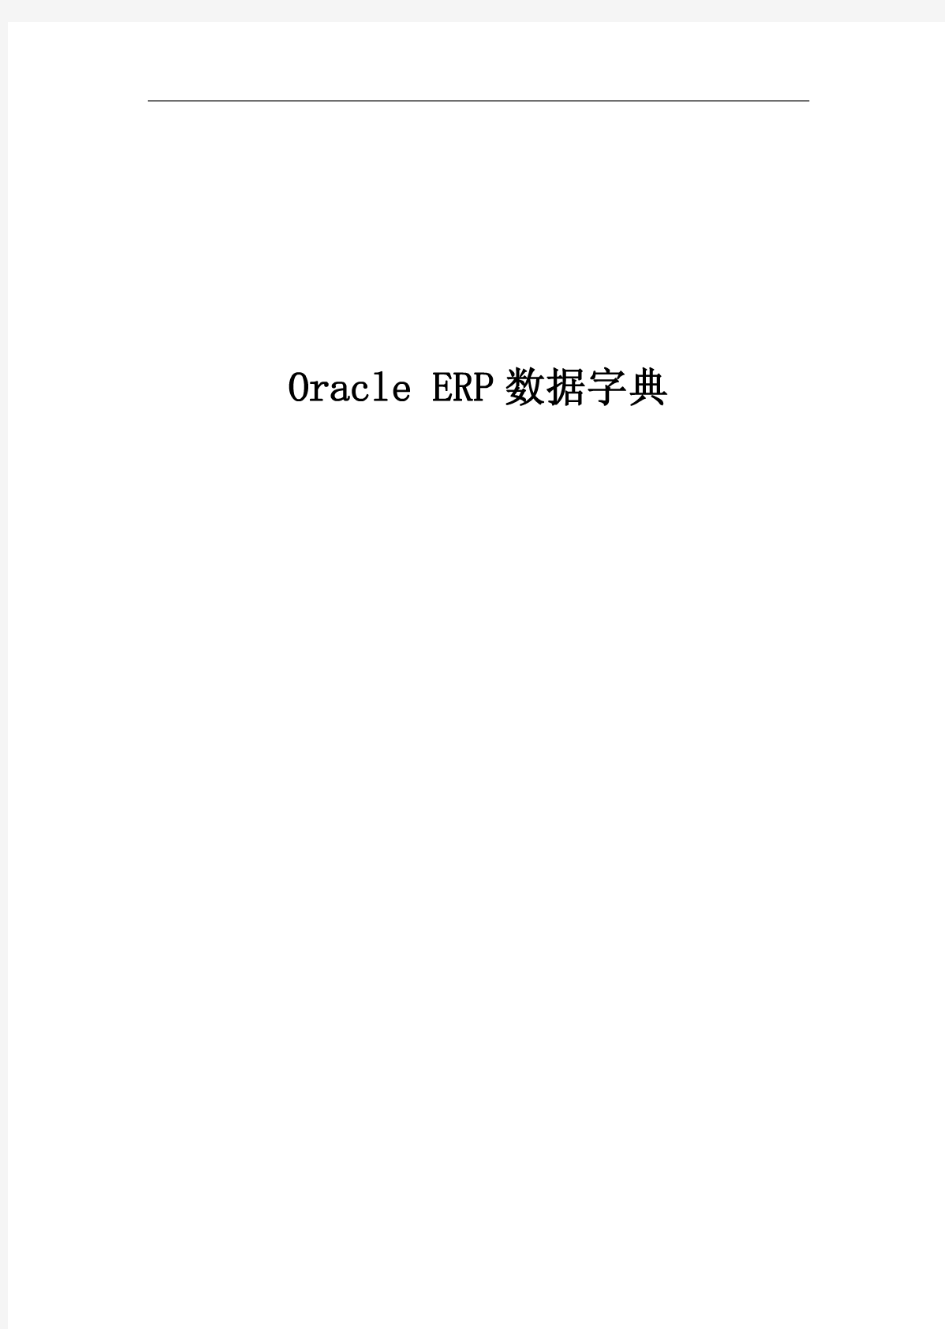 Oracle EBS中文数据字典